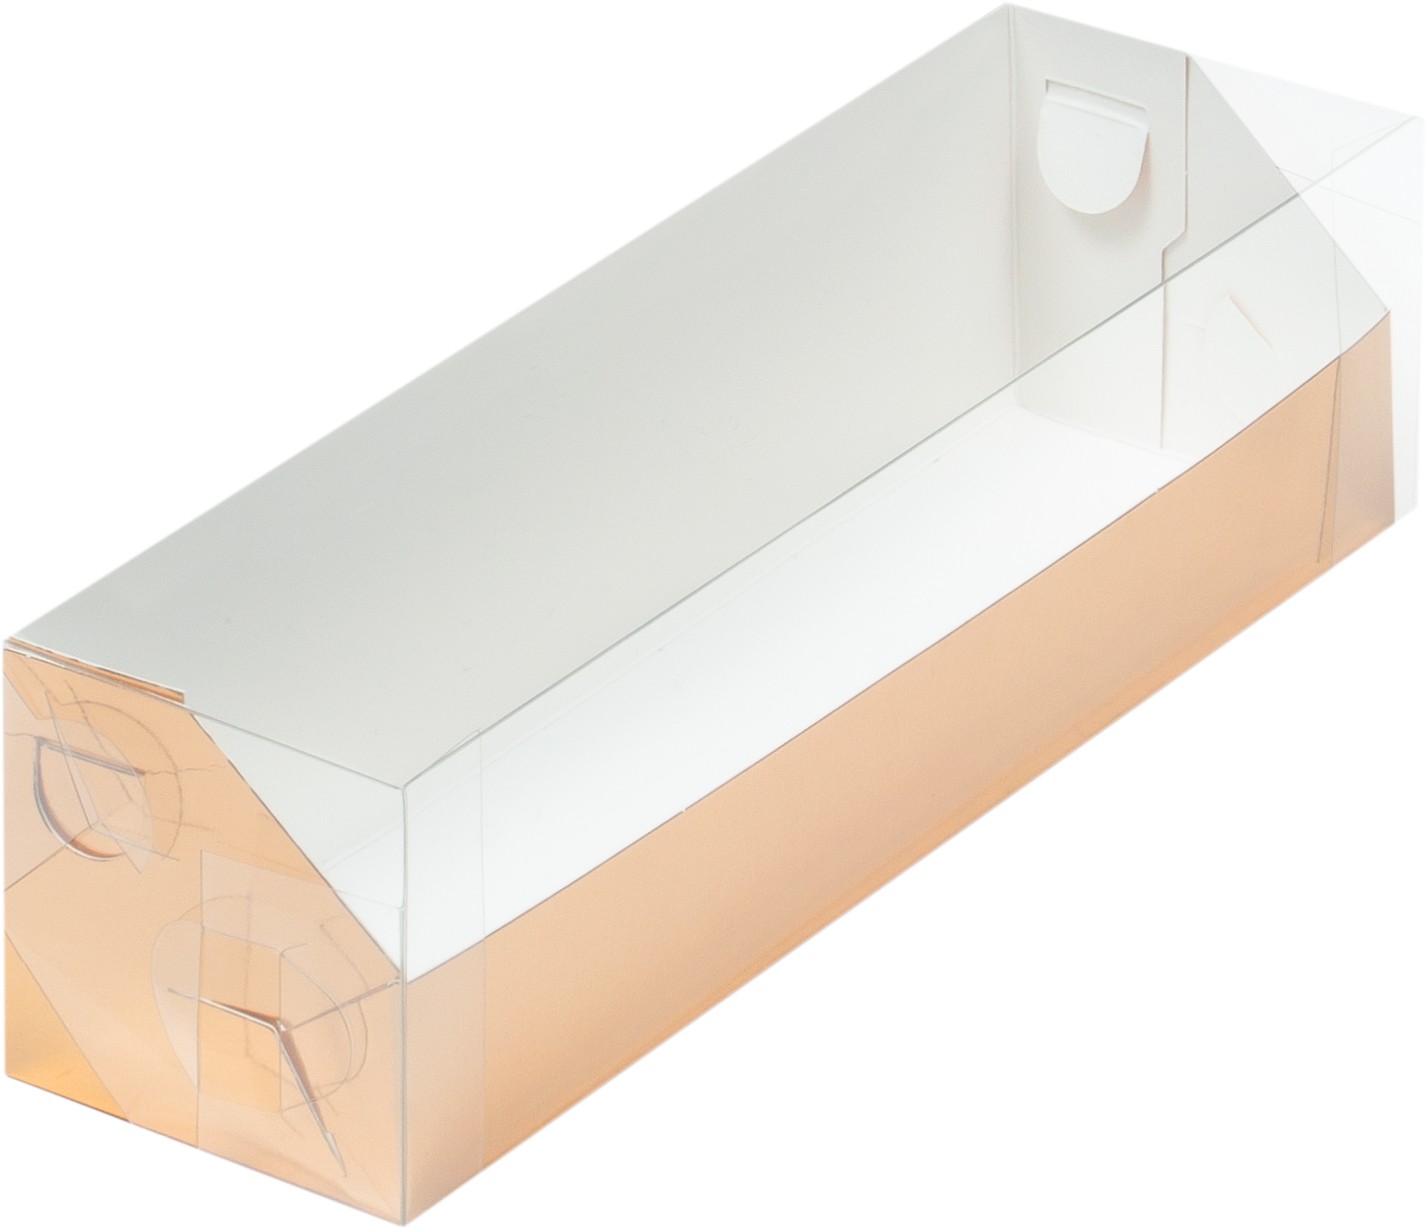 Коробка для макарон с пластиковой крышкой 19х5.5х5.5 см ЗОЛОТО